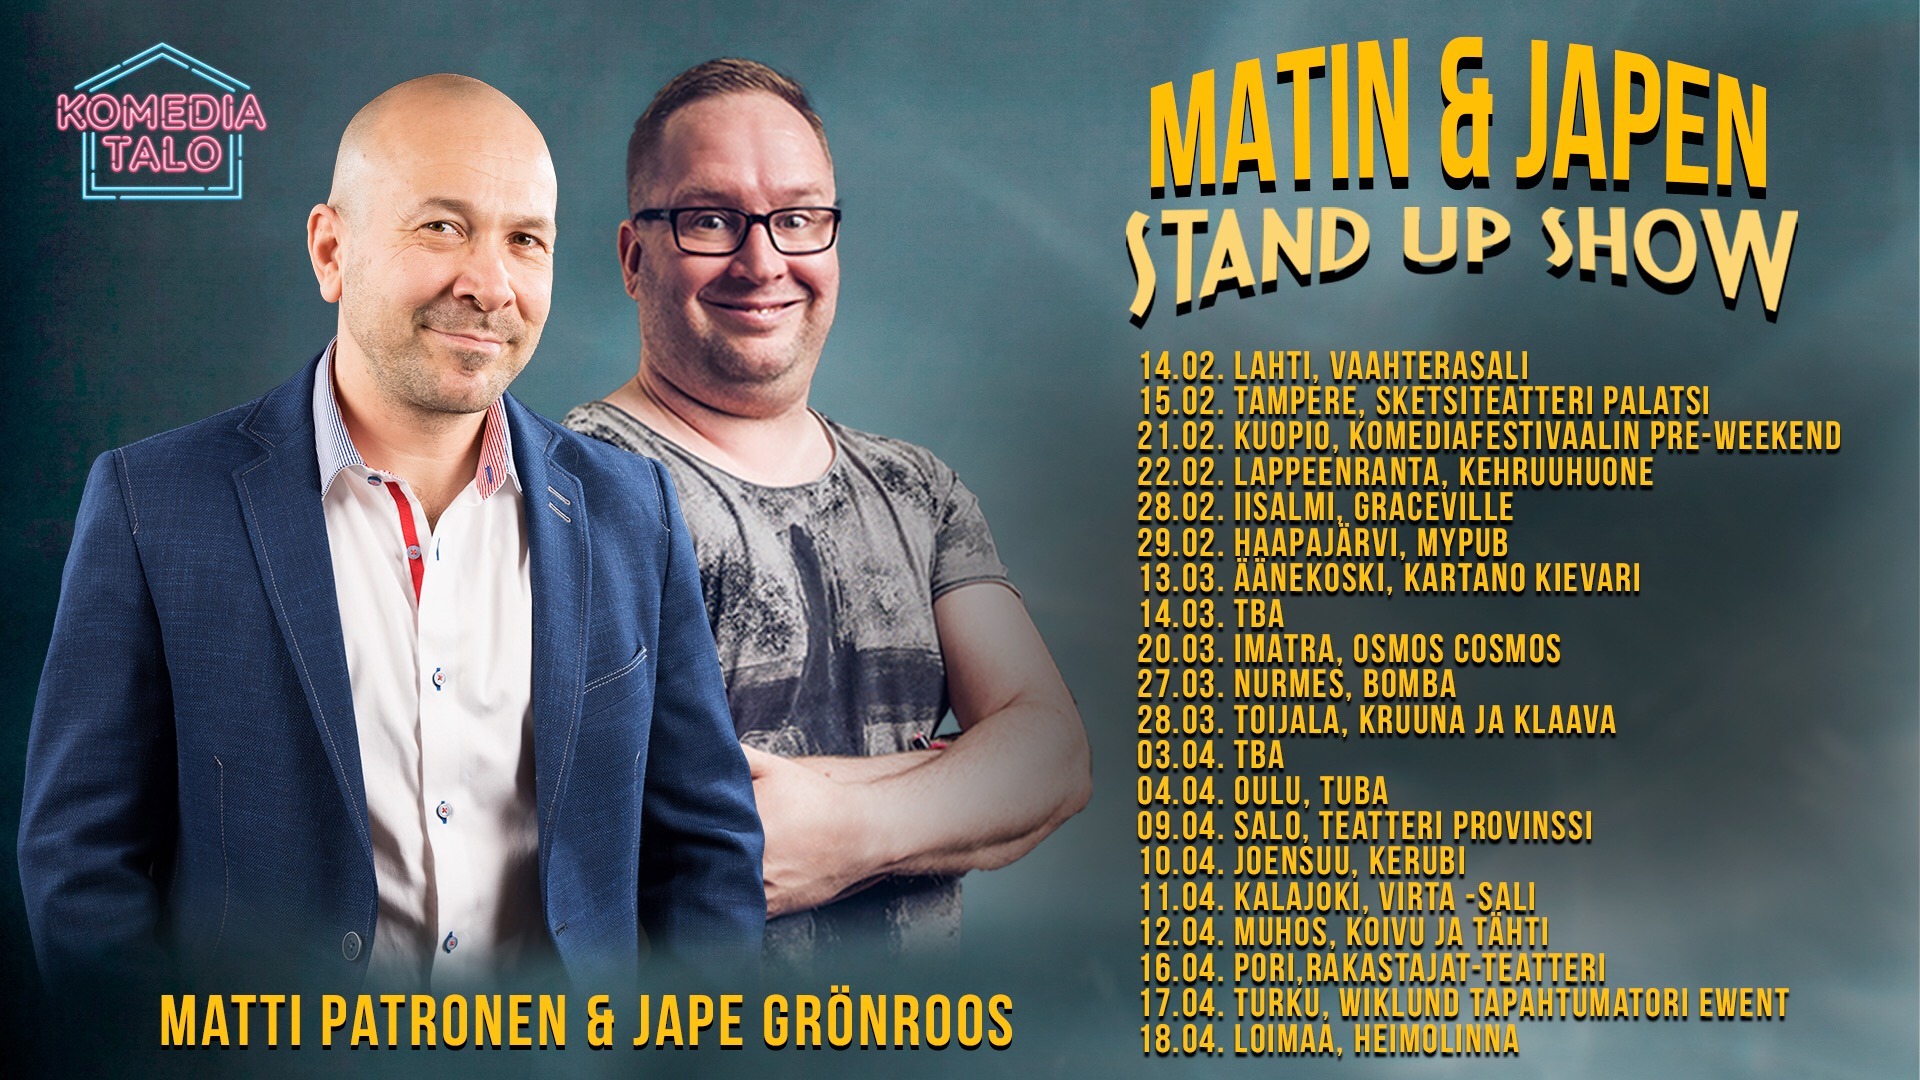 Matin ja Japen stand up show -kiertue 14.2. – 18.4.2020